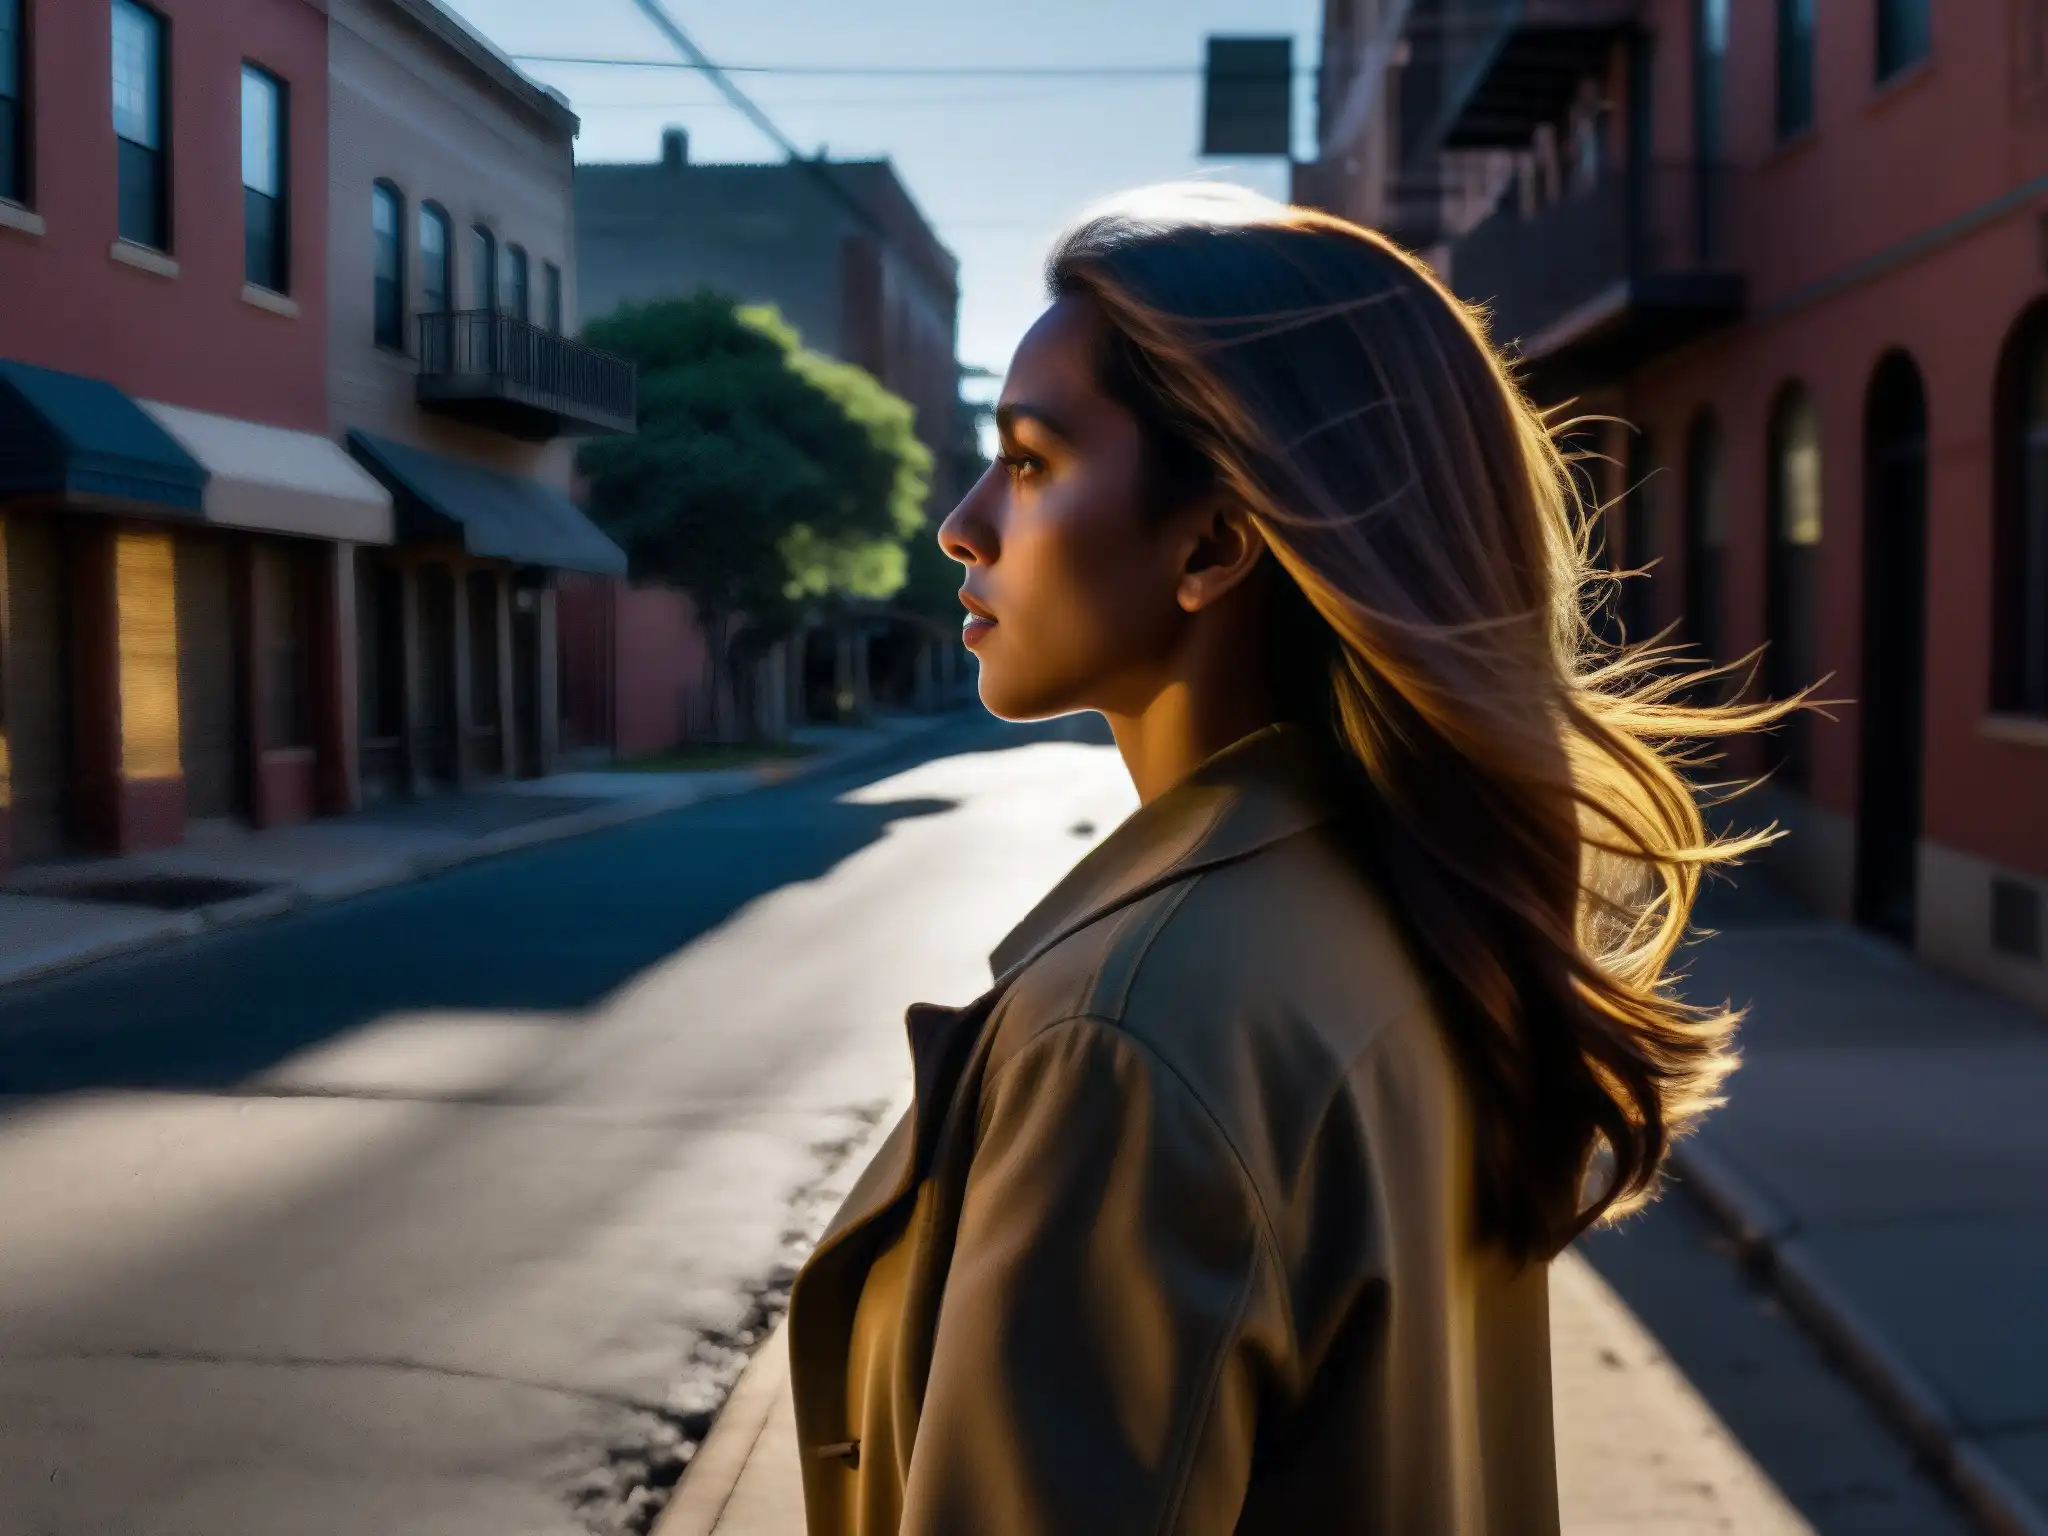 Enigmática silueta de mujer solitaria en calle urbana oscura, evocando la leyenda urbana 'Mujer Llorona'